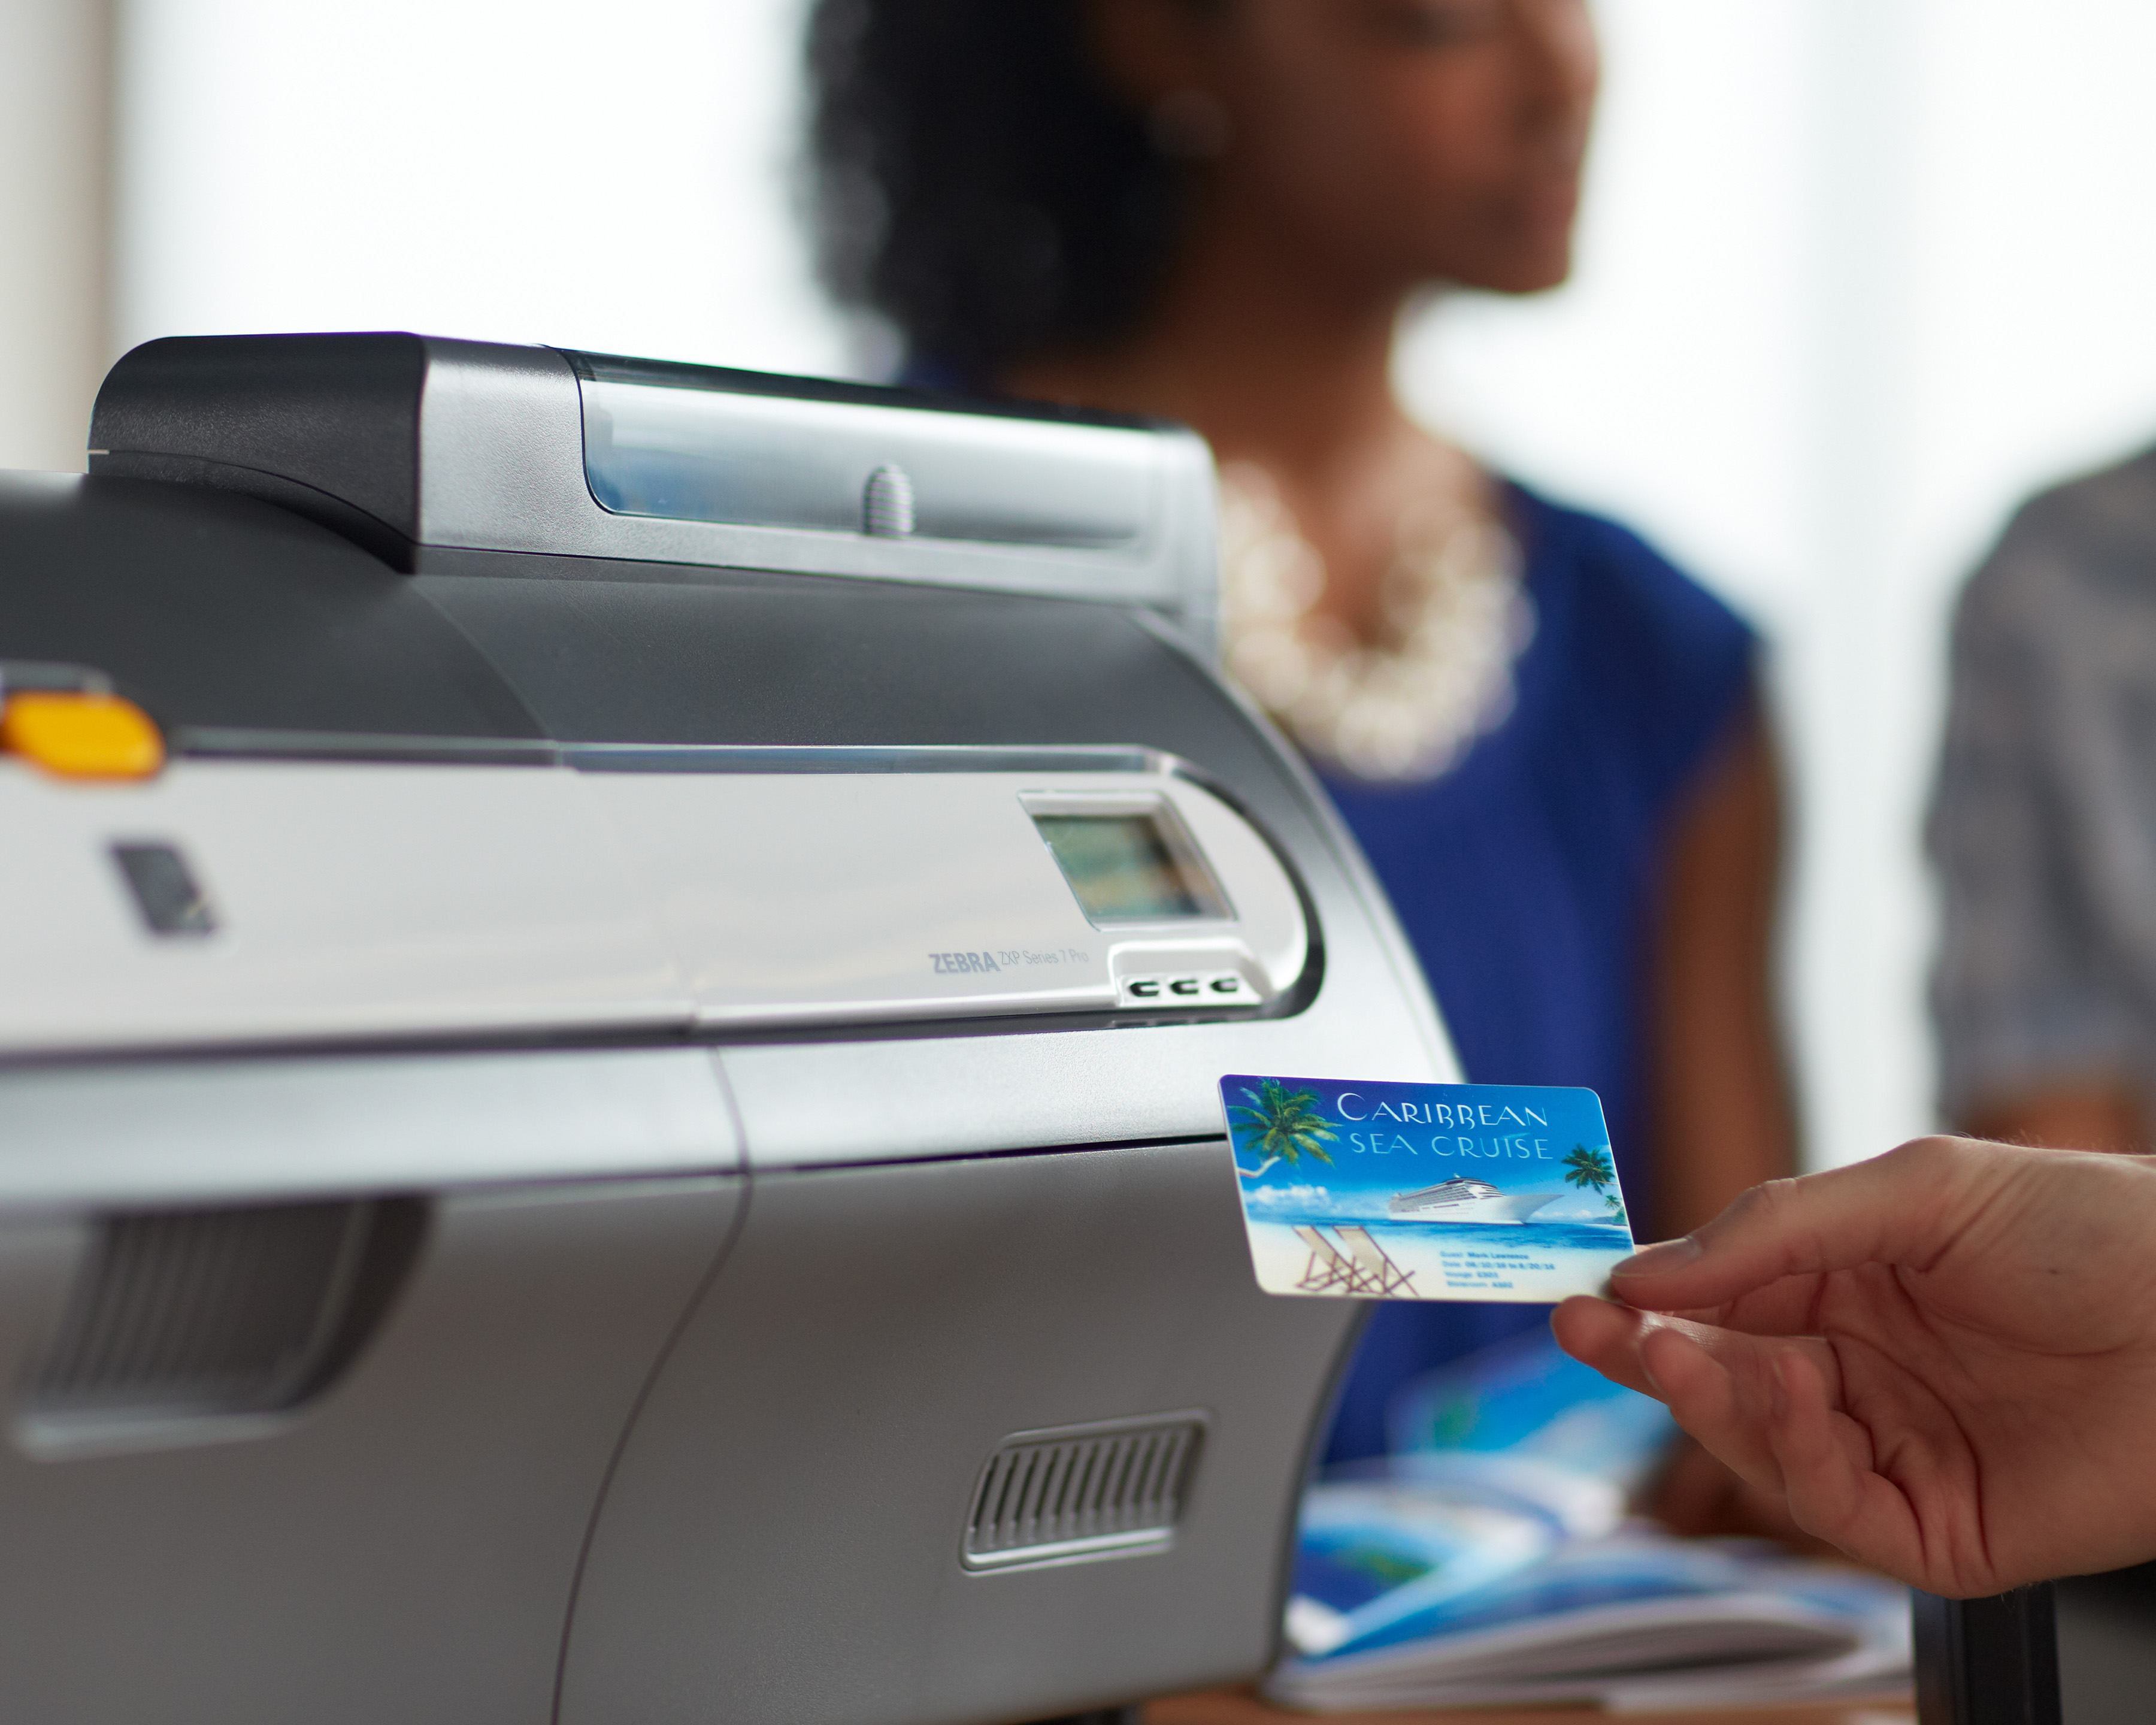 Zebra card printer prints out a Caribbean sea cruise membership card